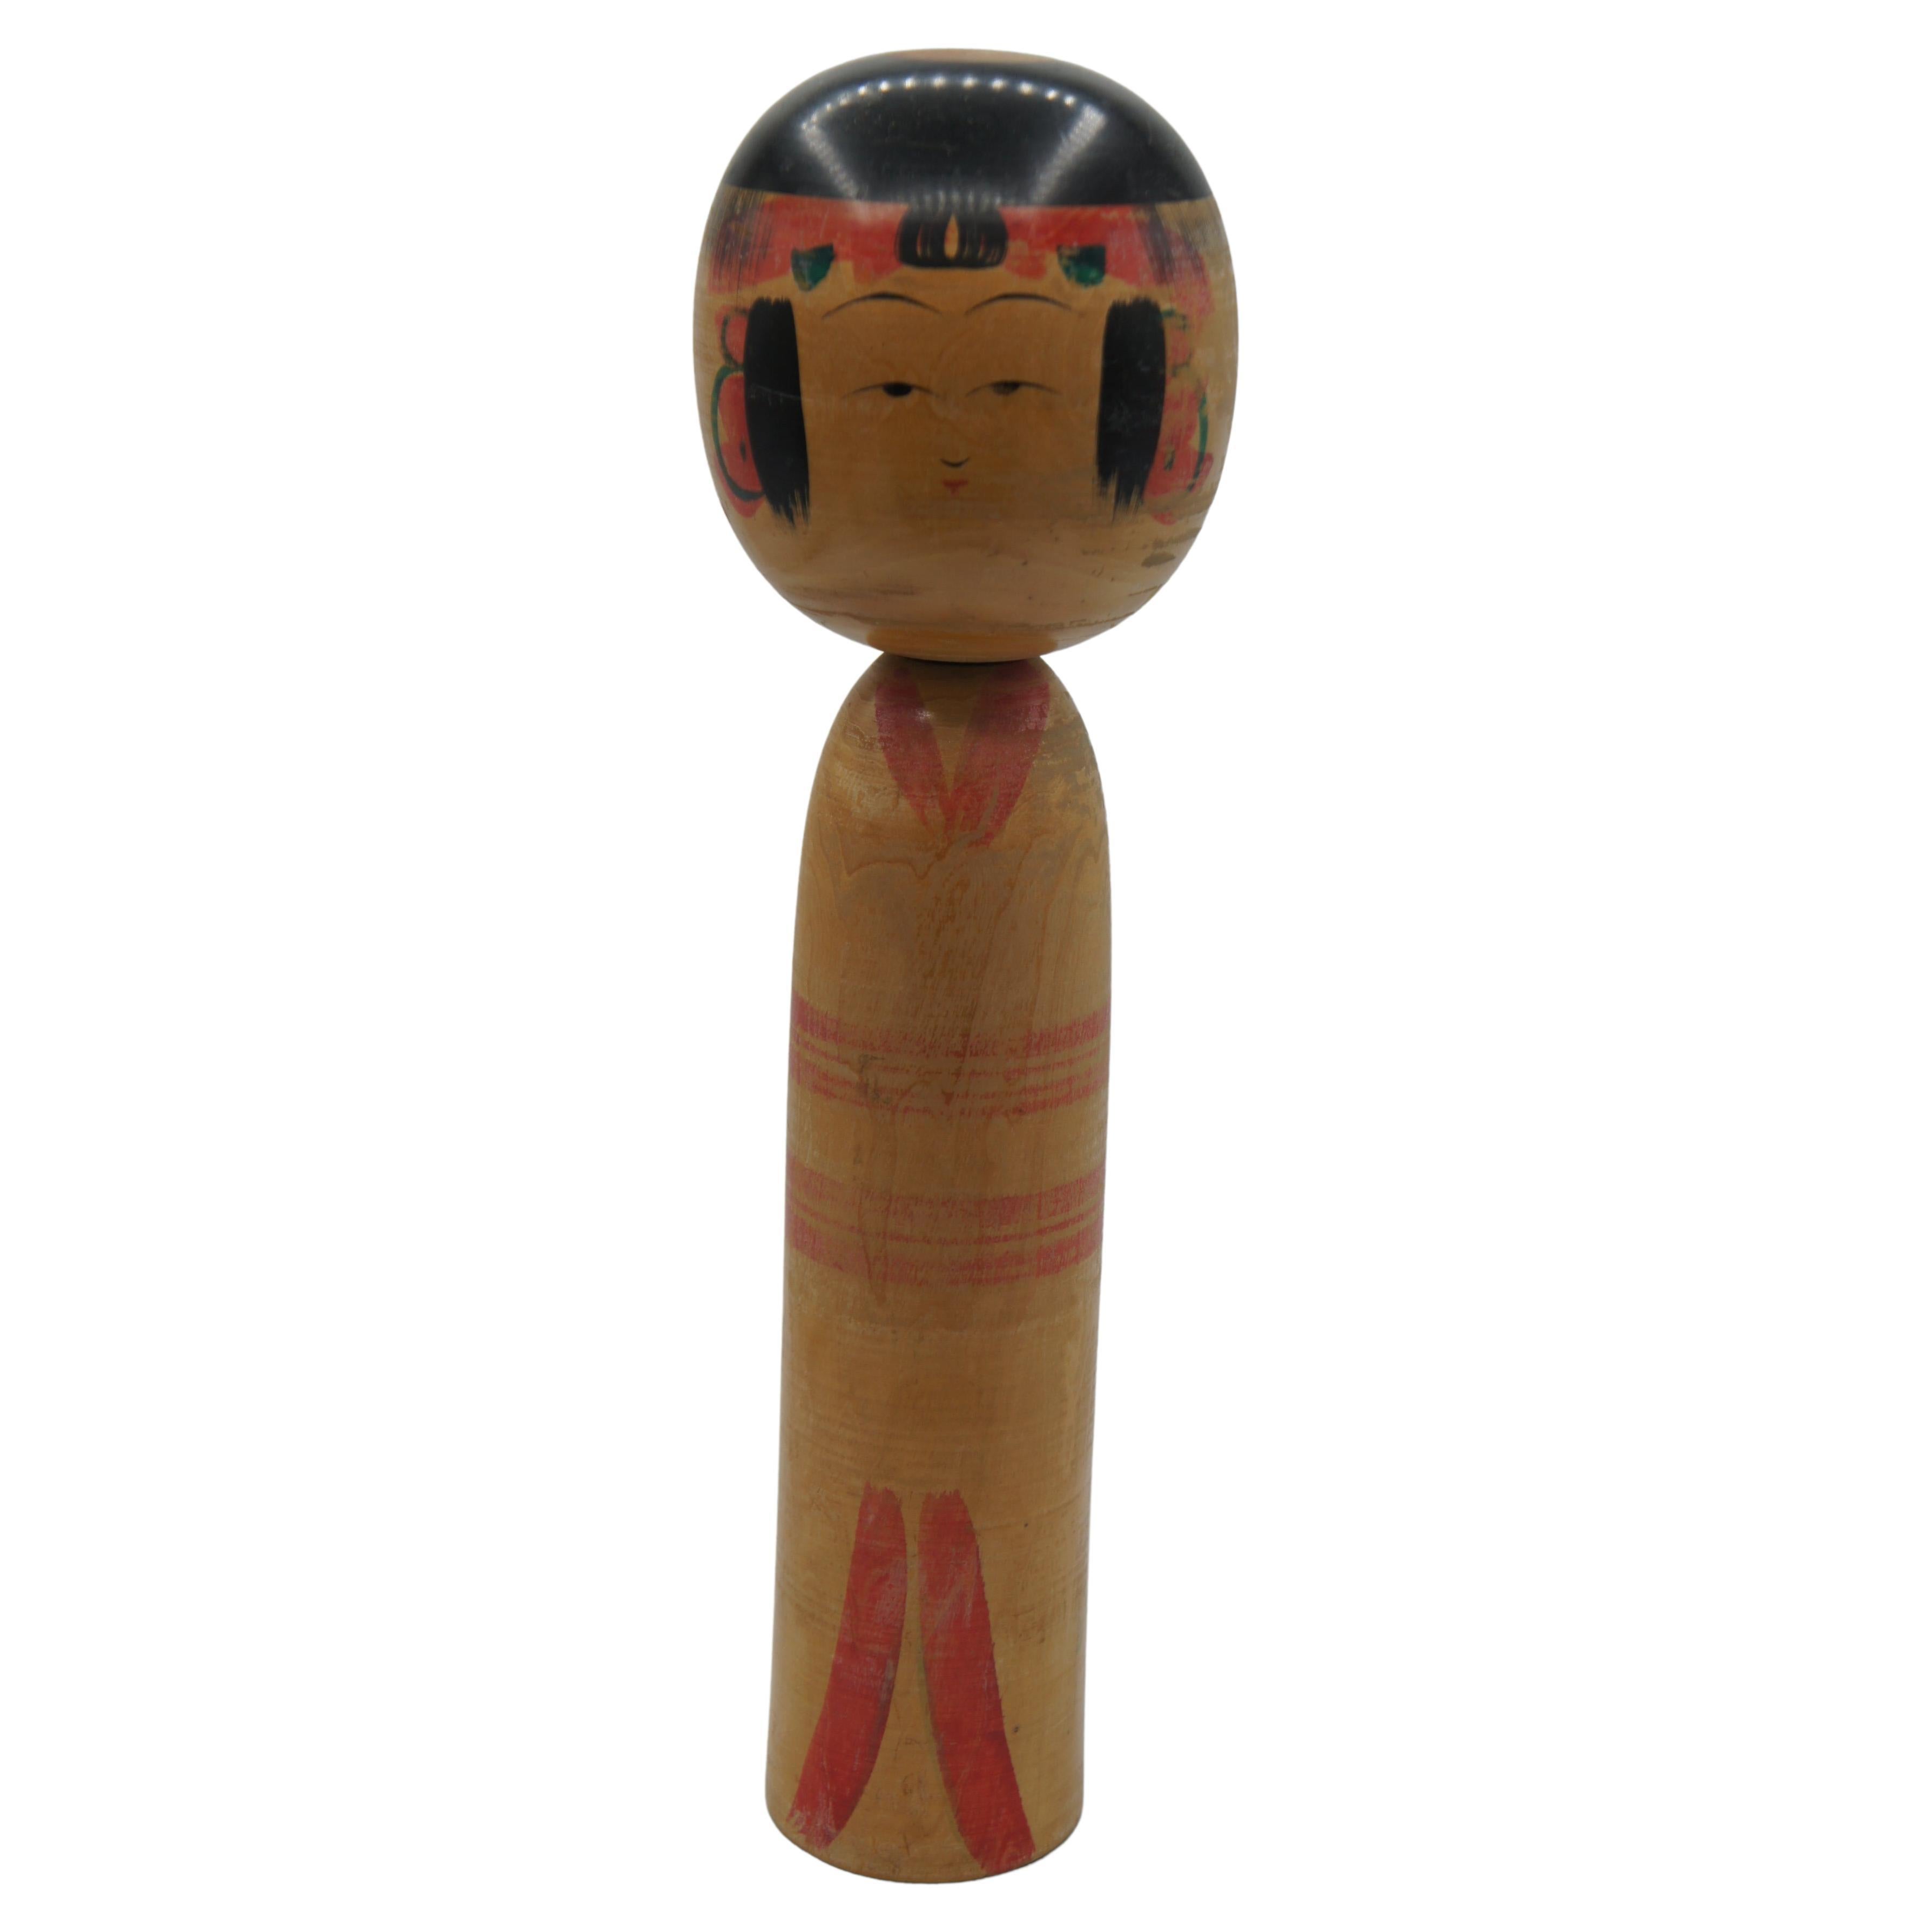 Japanische Yajiro Kokeshi-Puppe aus Holz 36cm, 1970er Jahre